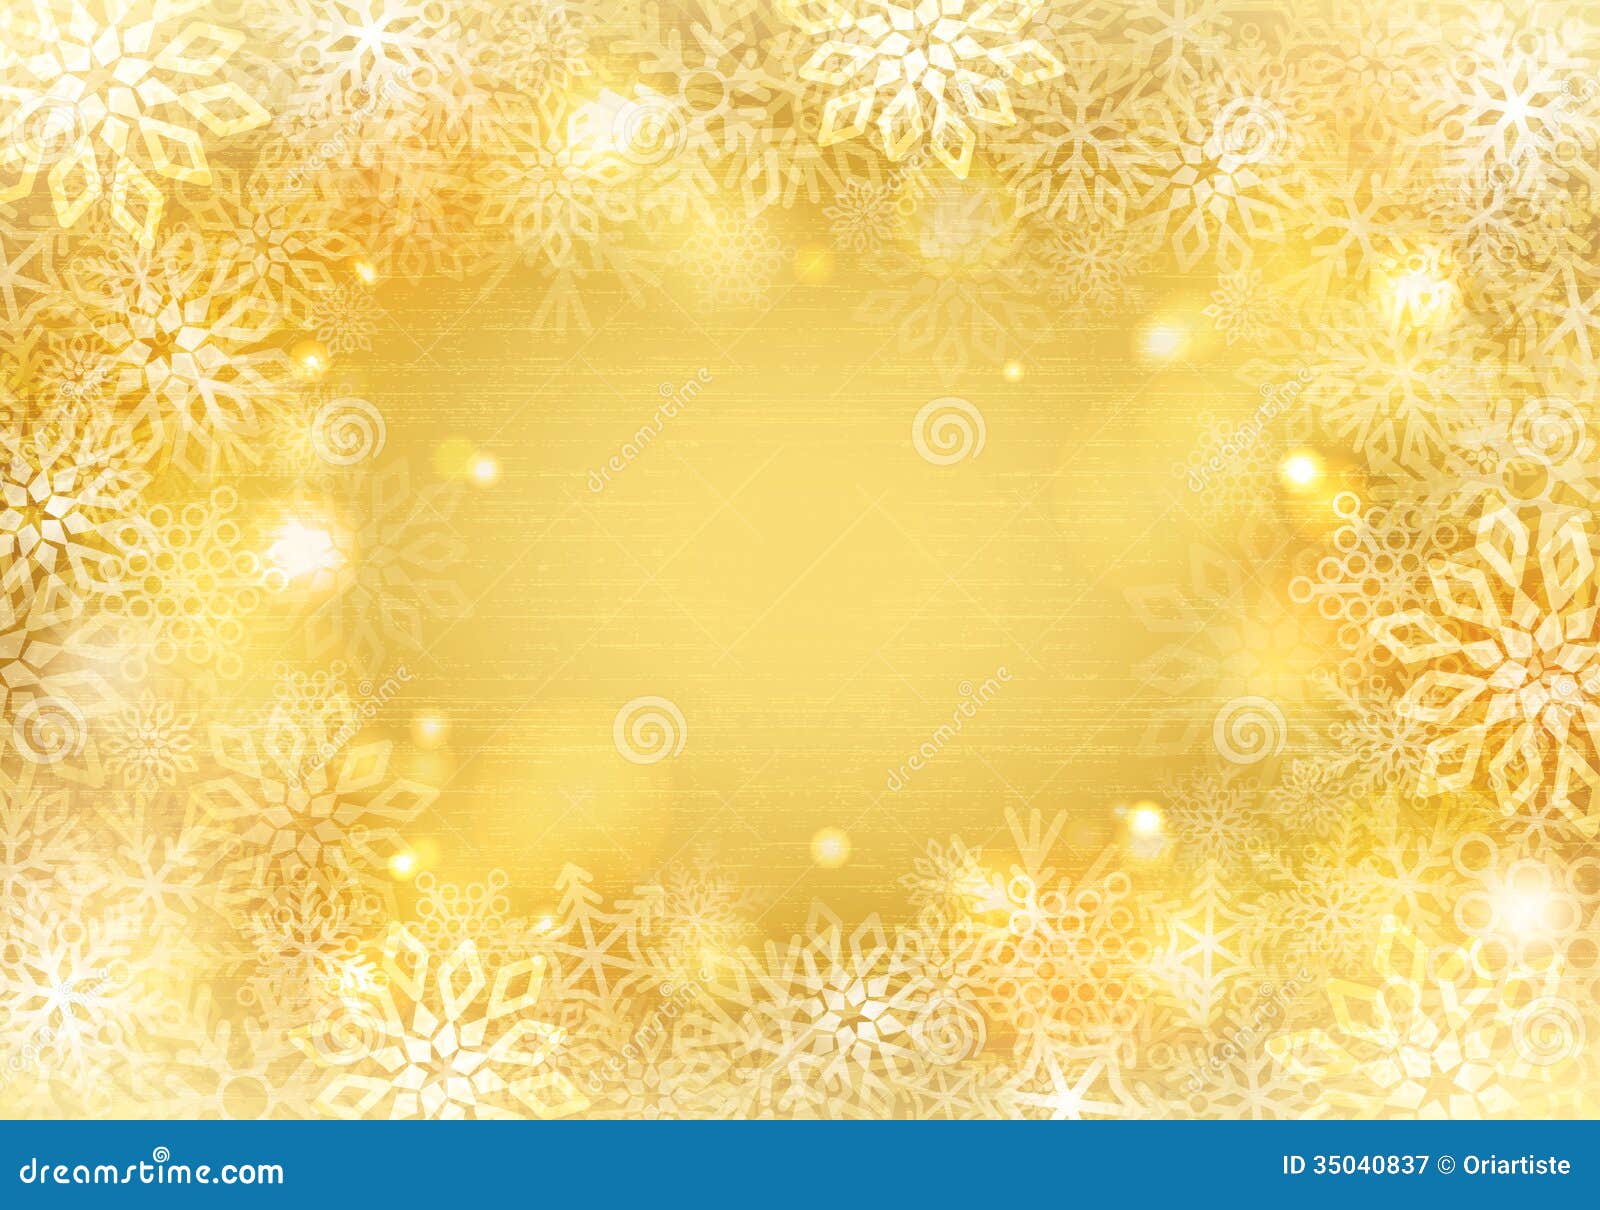 yellow snowflake clipart - photo #42